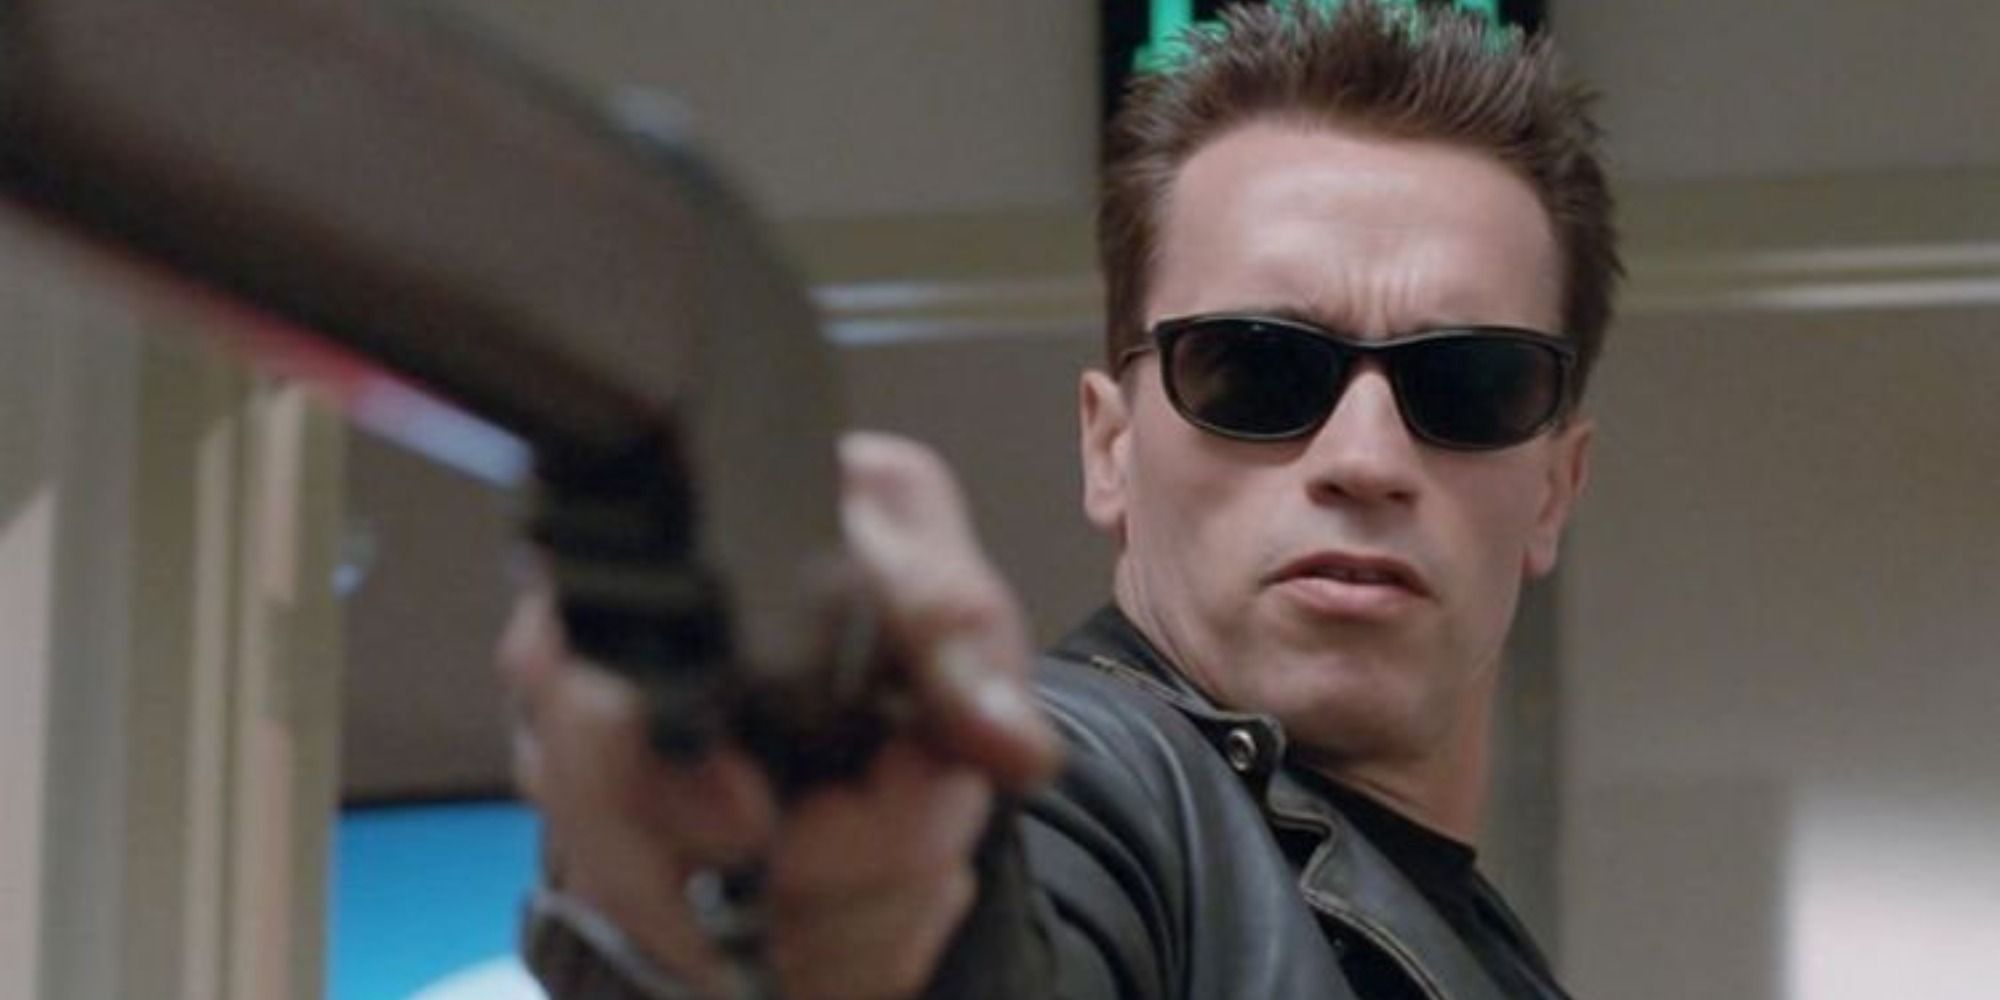 Arnold Schwarzenegger as Terminator wearing sunglasses and pointing gun